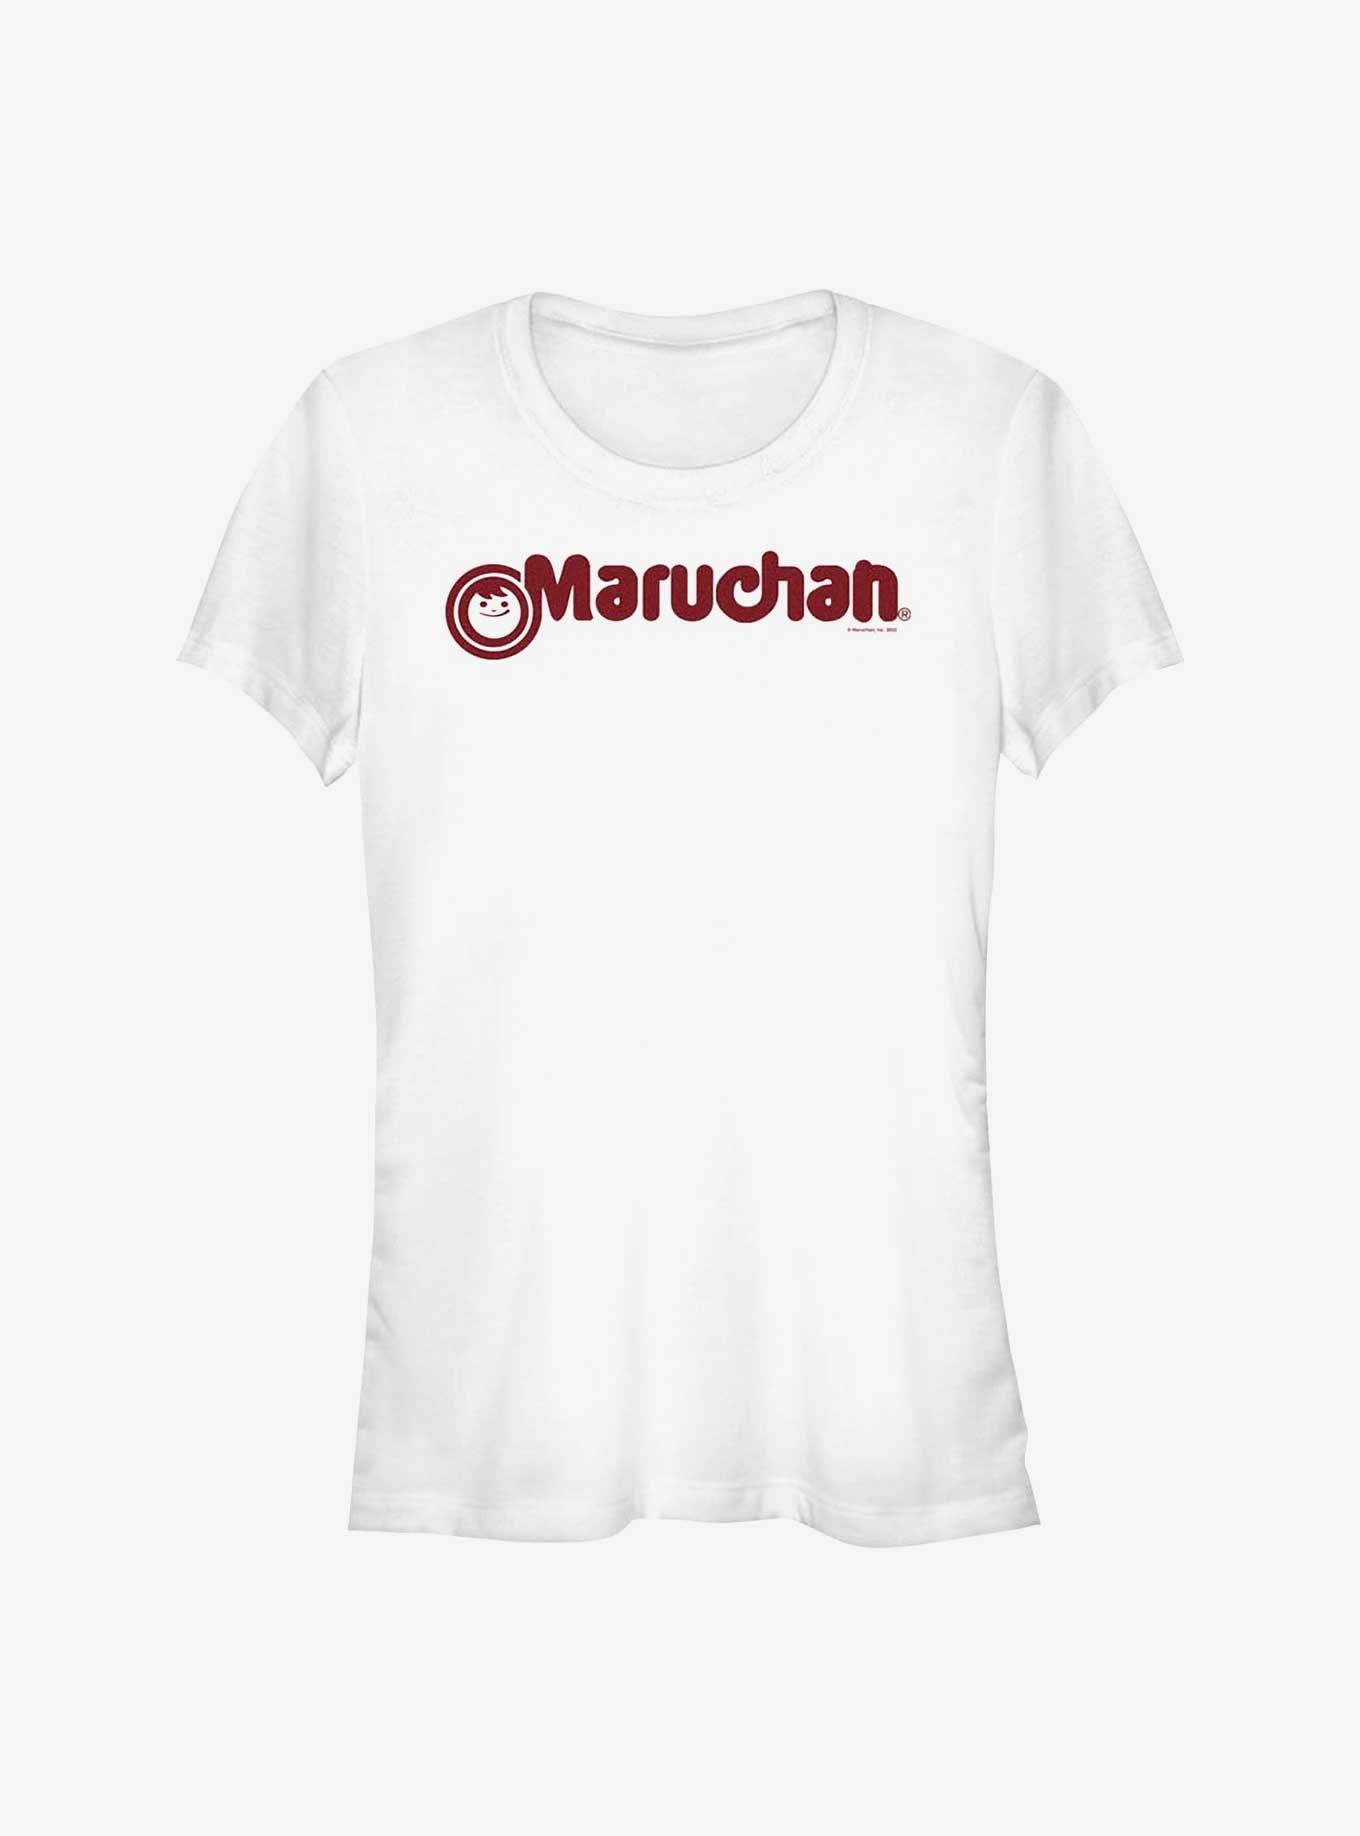 Maruchan Centered Logo Girls T-Shirt